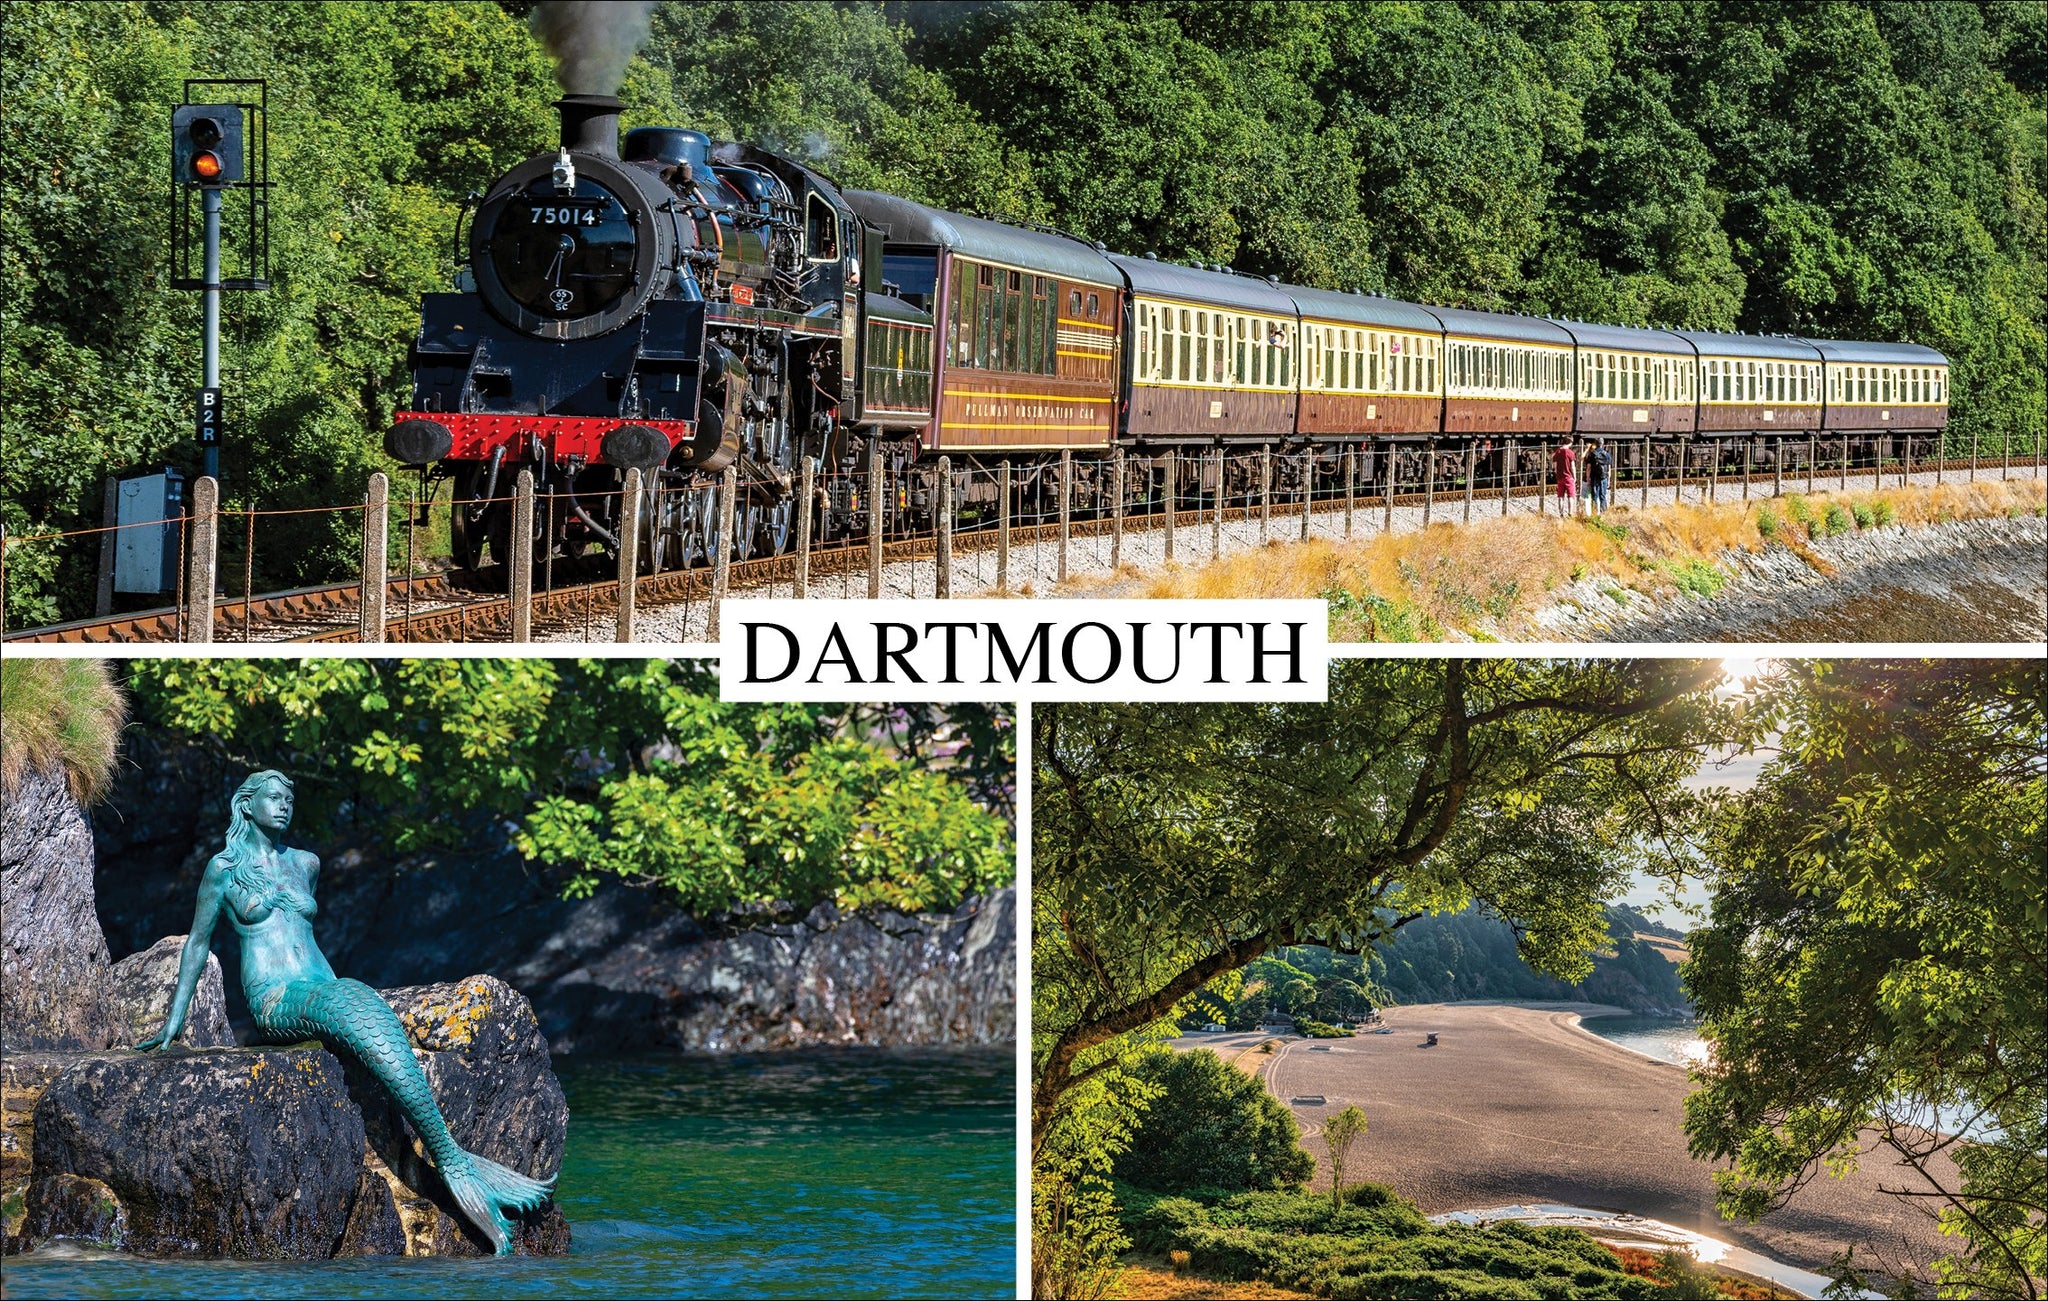 PDV641 - Dartmouth Scenes (Steam Train/Mermaid) Postcard